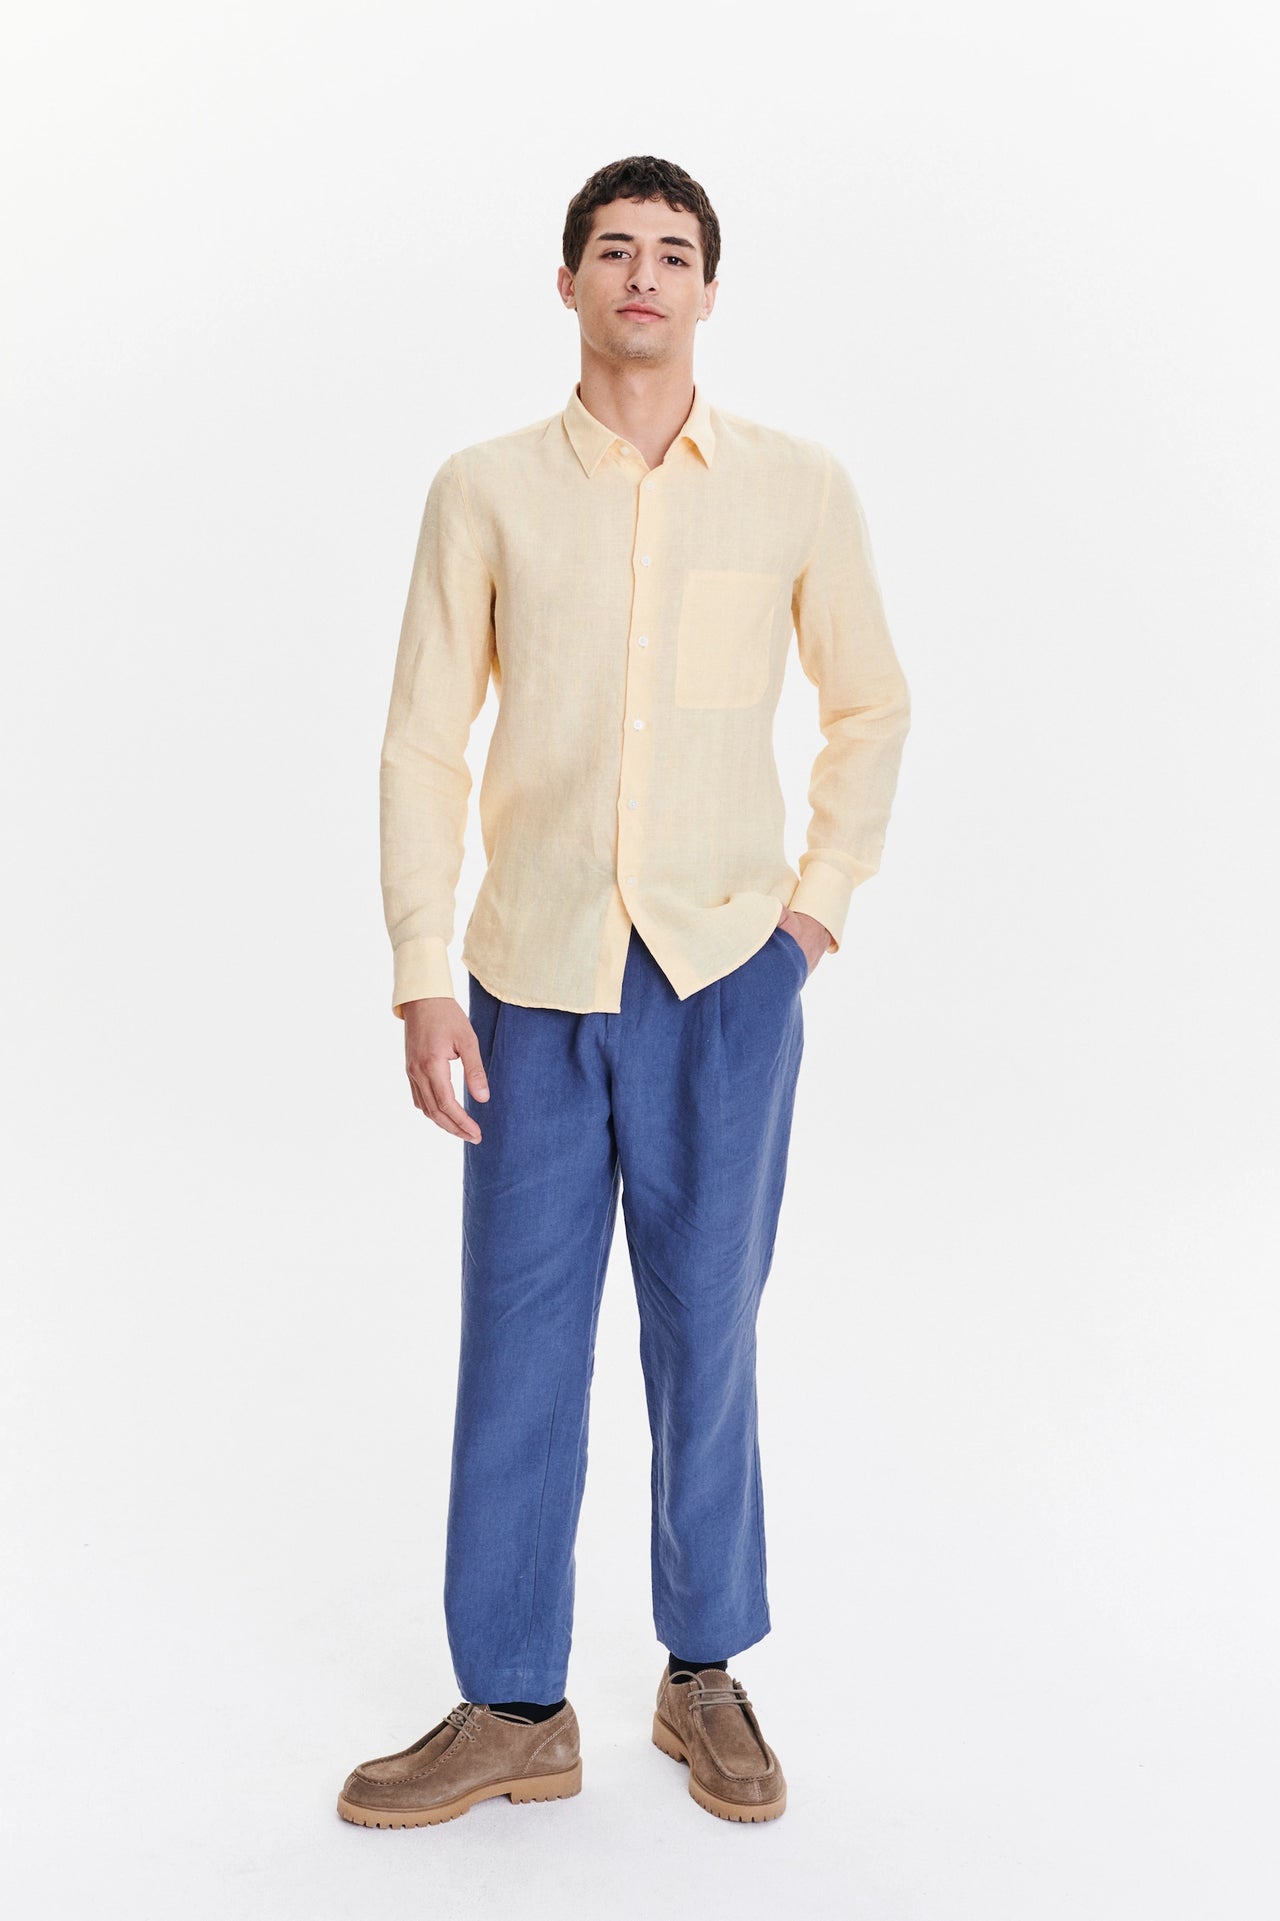 Feel Good Shirt in a Fine Buttermilk Yellow Italian Linen